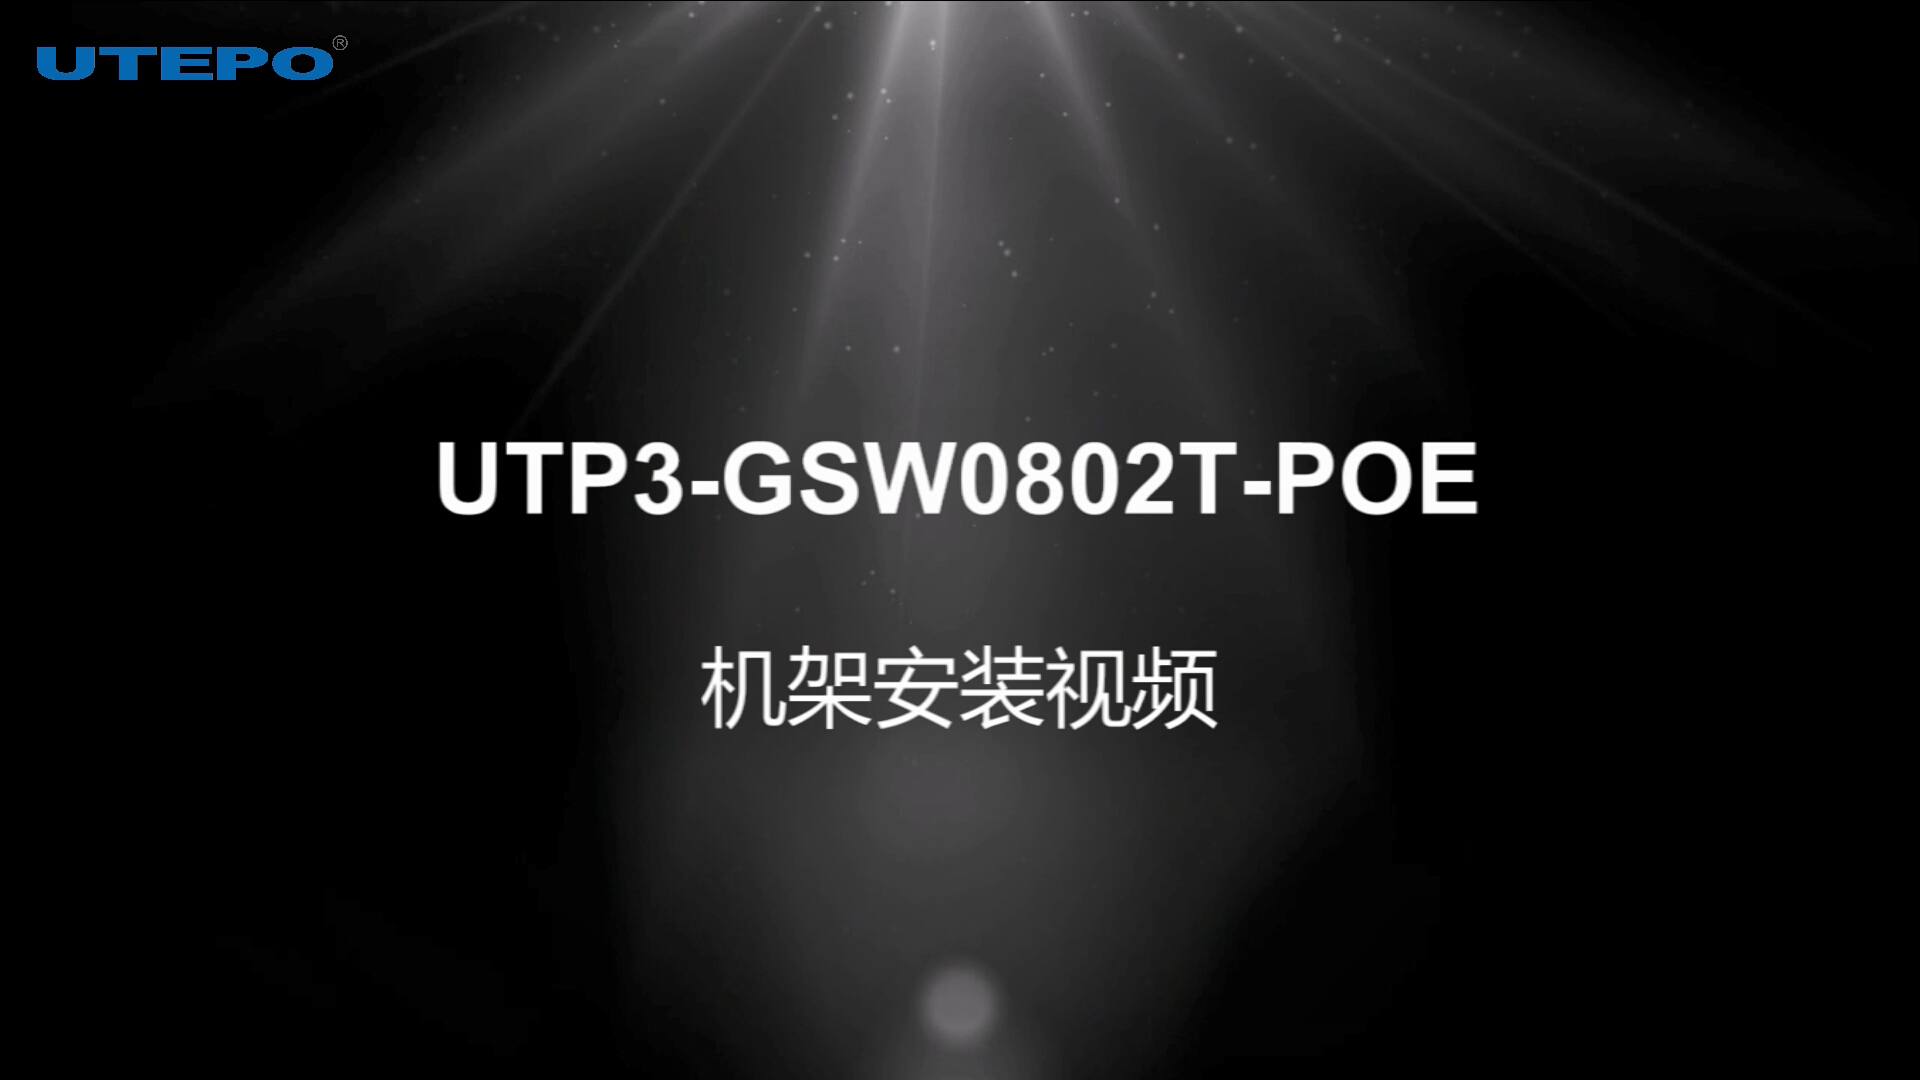 utp3-gsw0802t-poe机架安装视频